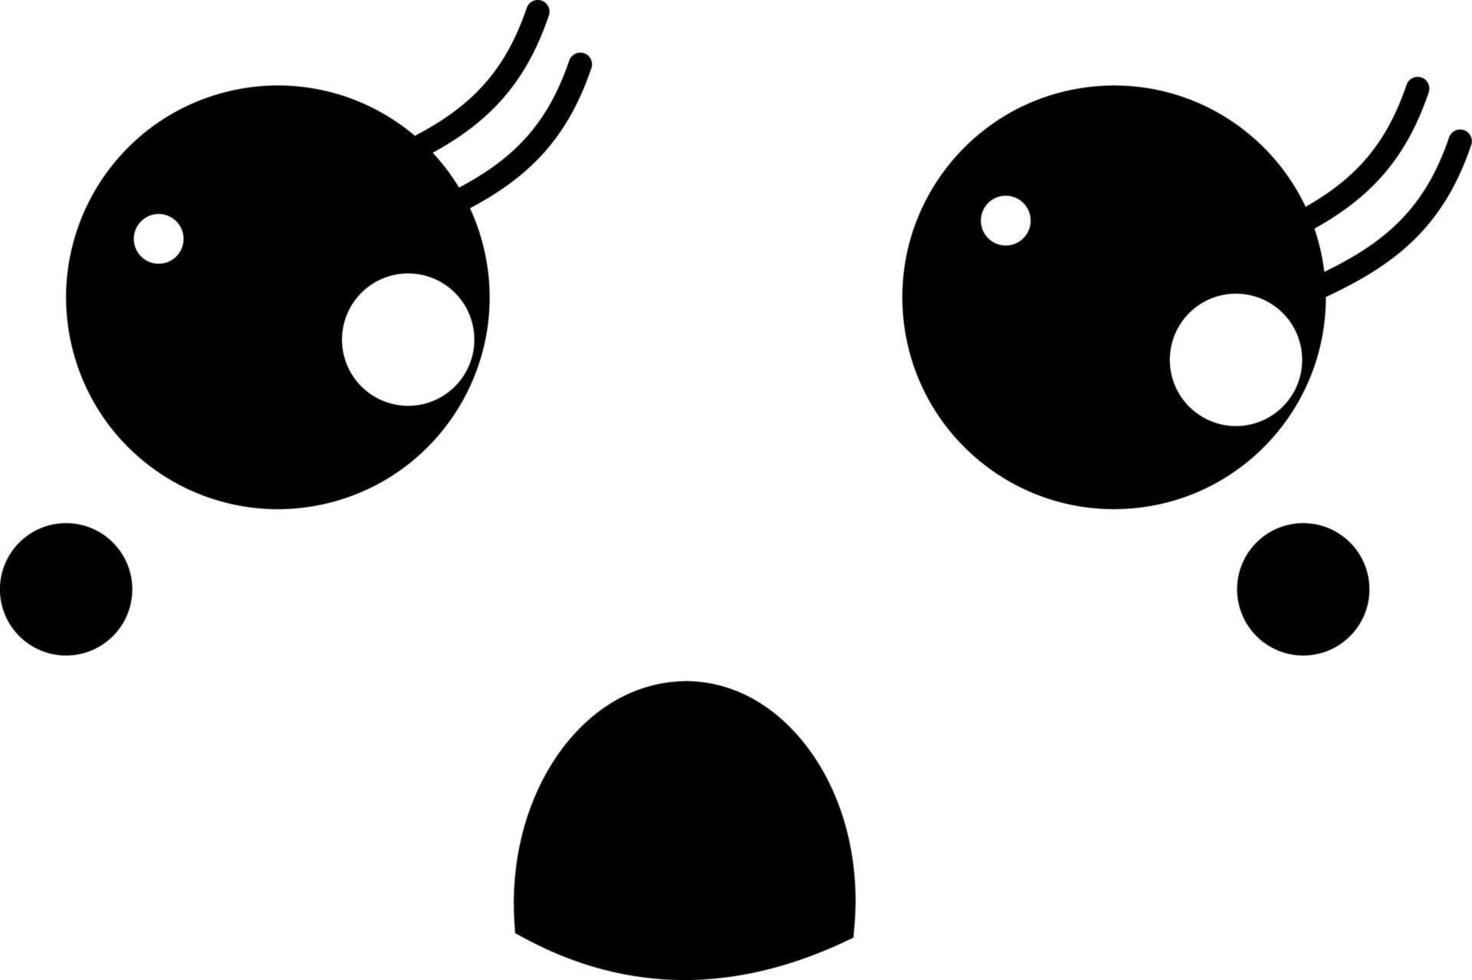 Fright emoji, illustration, vector on a white background.